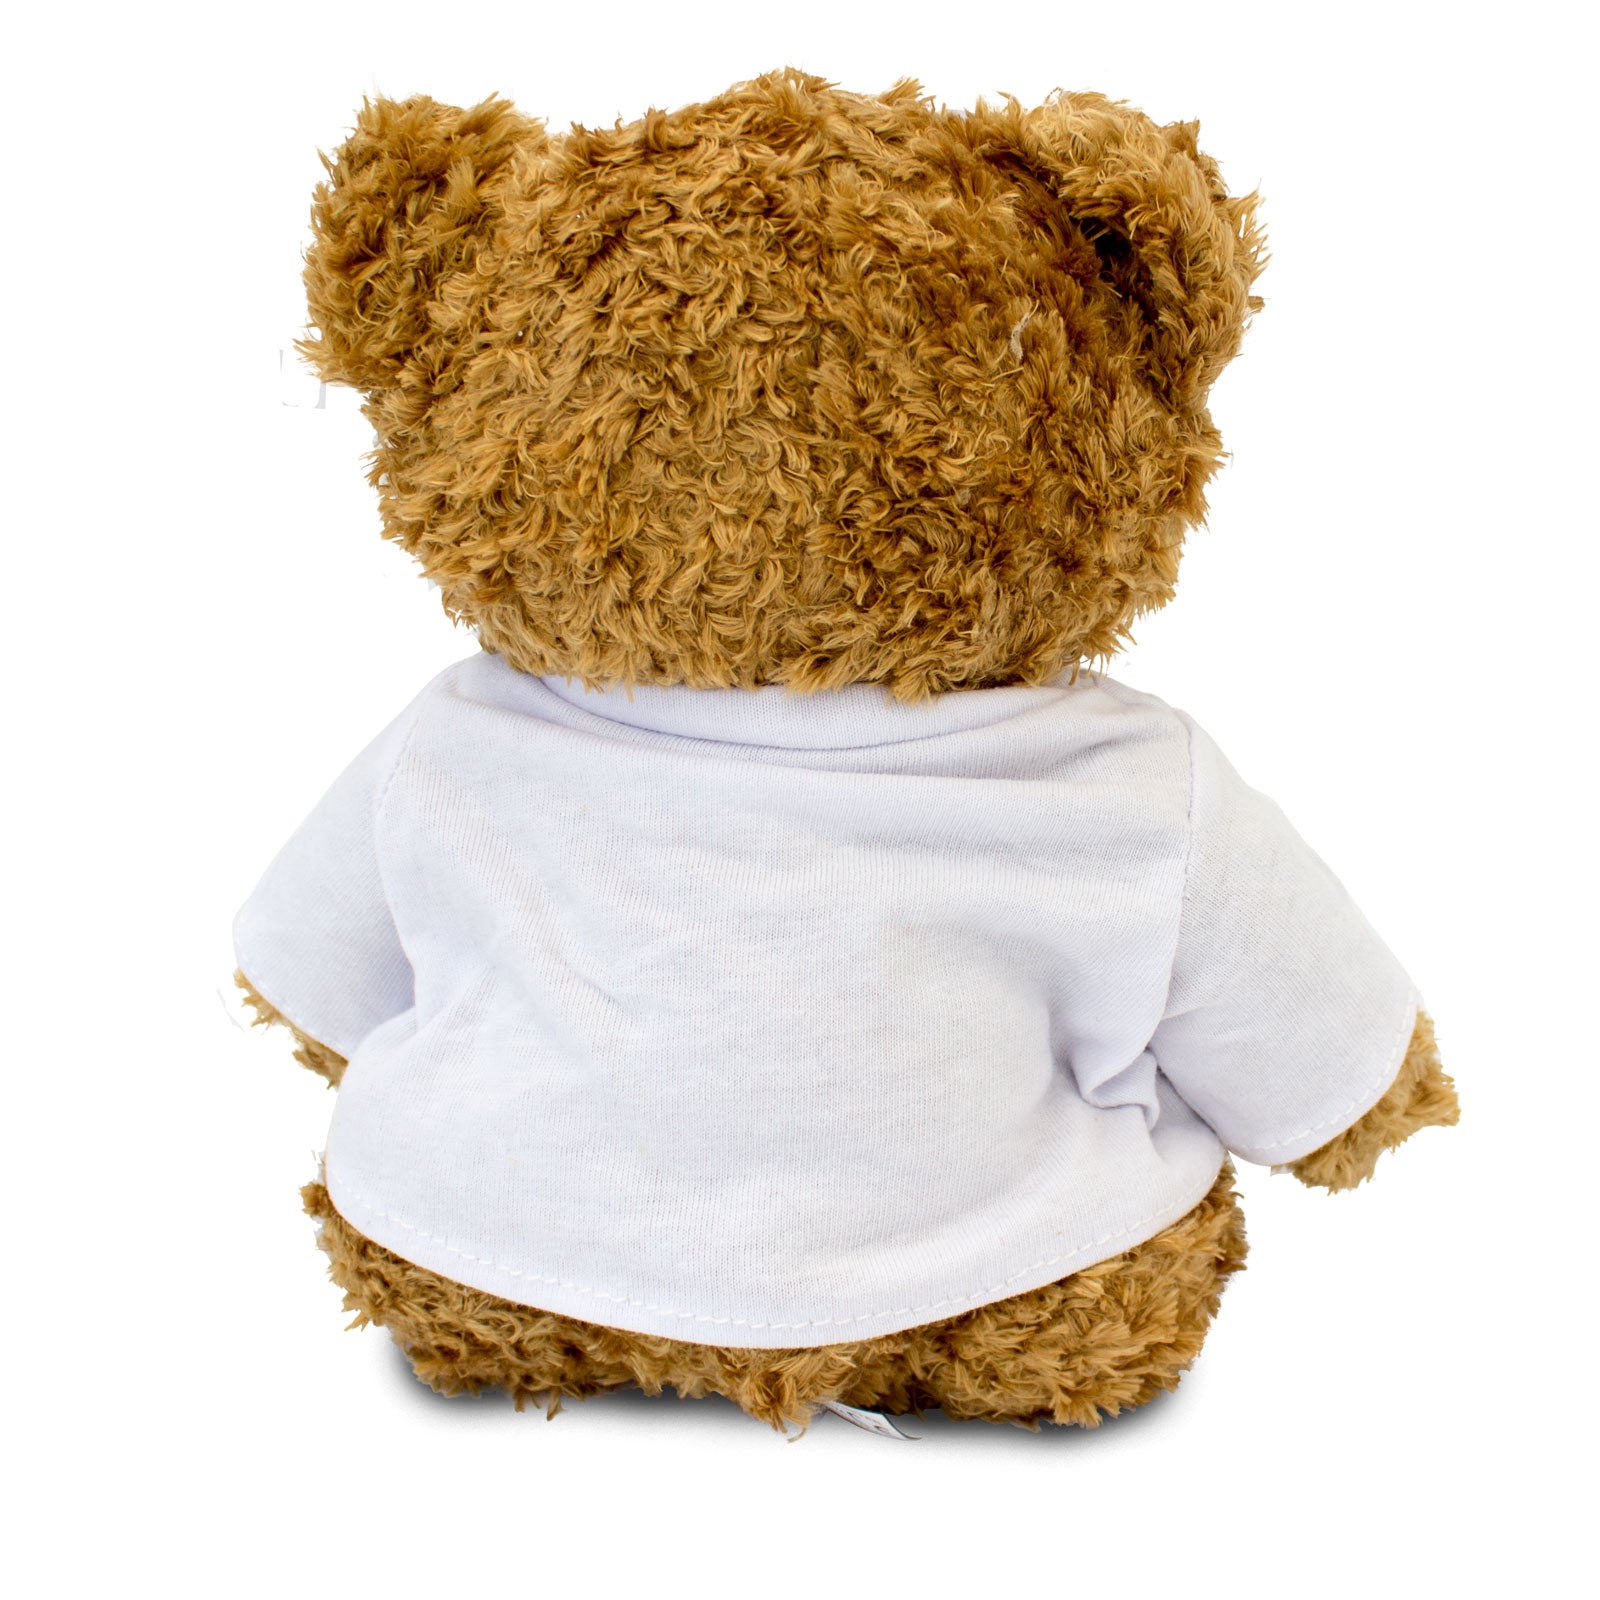 I Love Ska - Teddy Bear